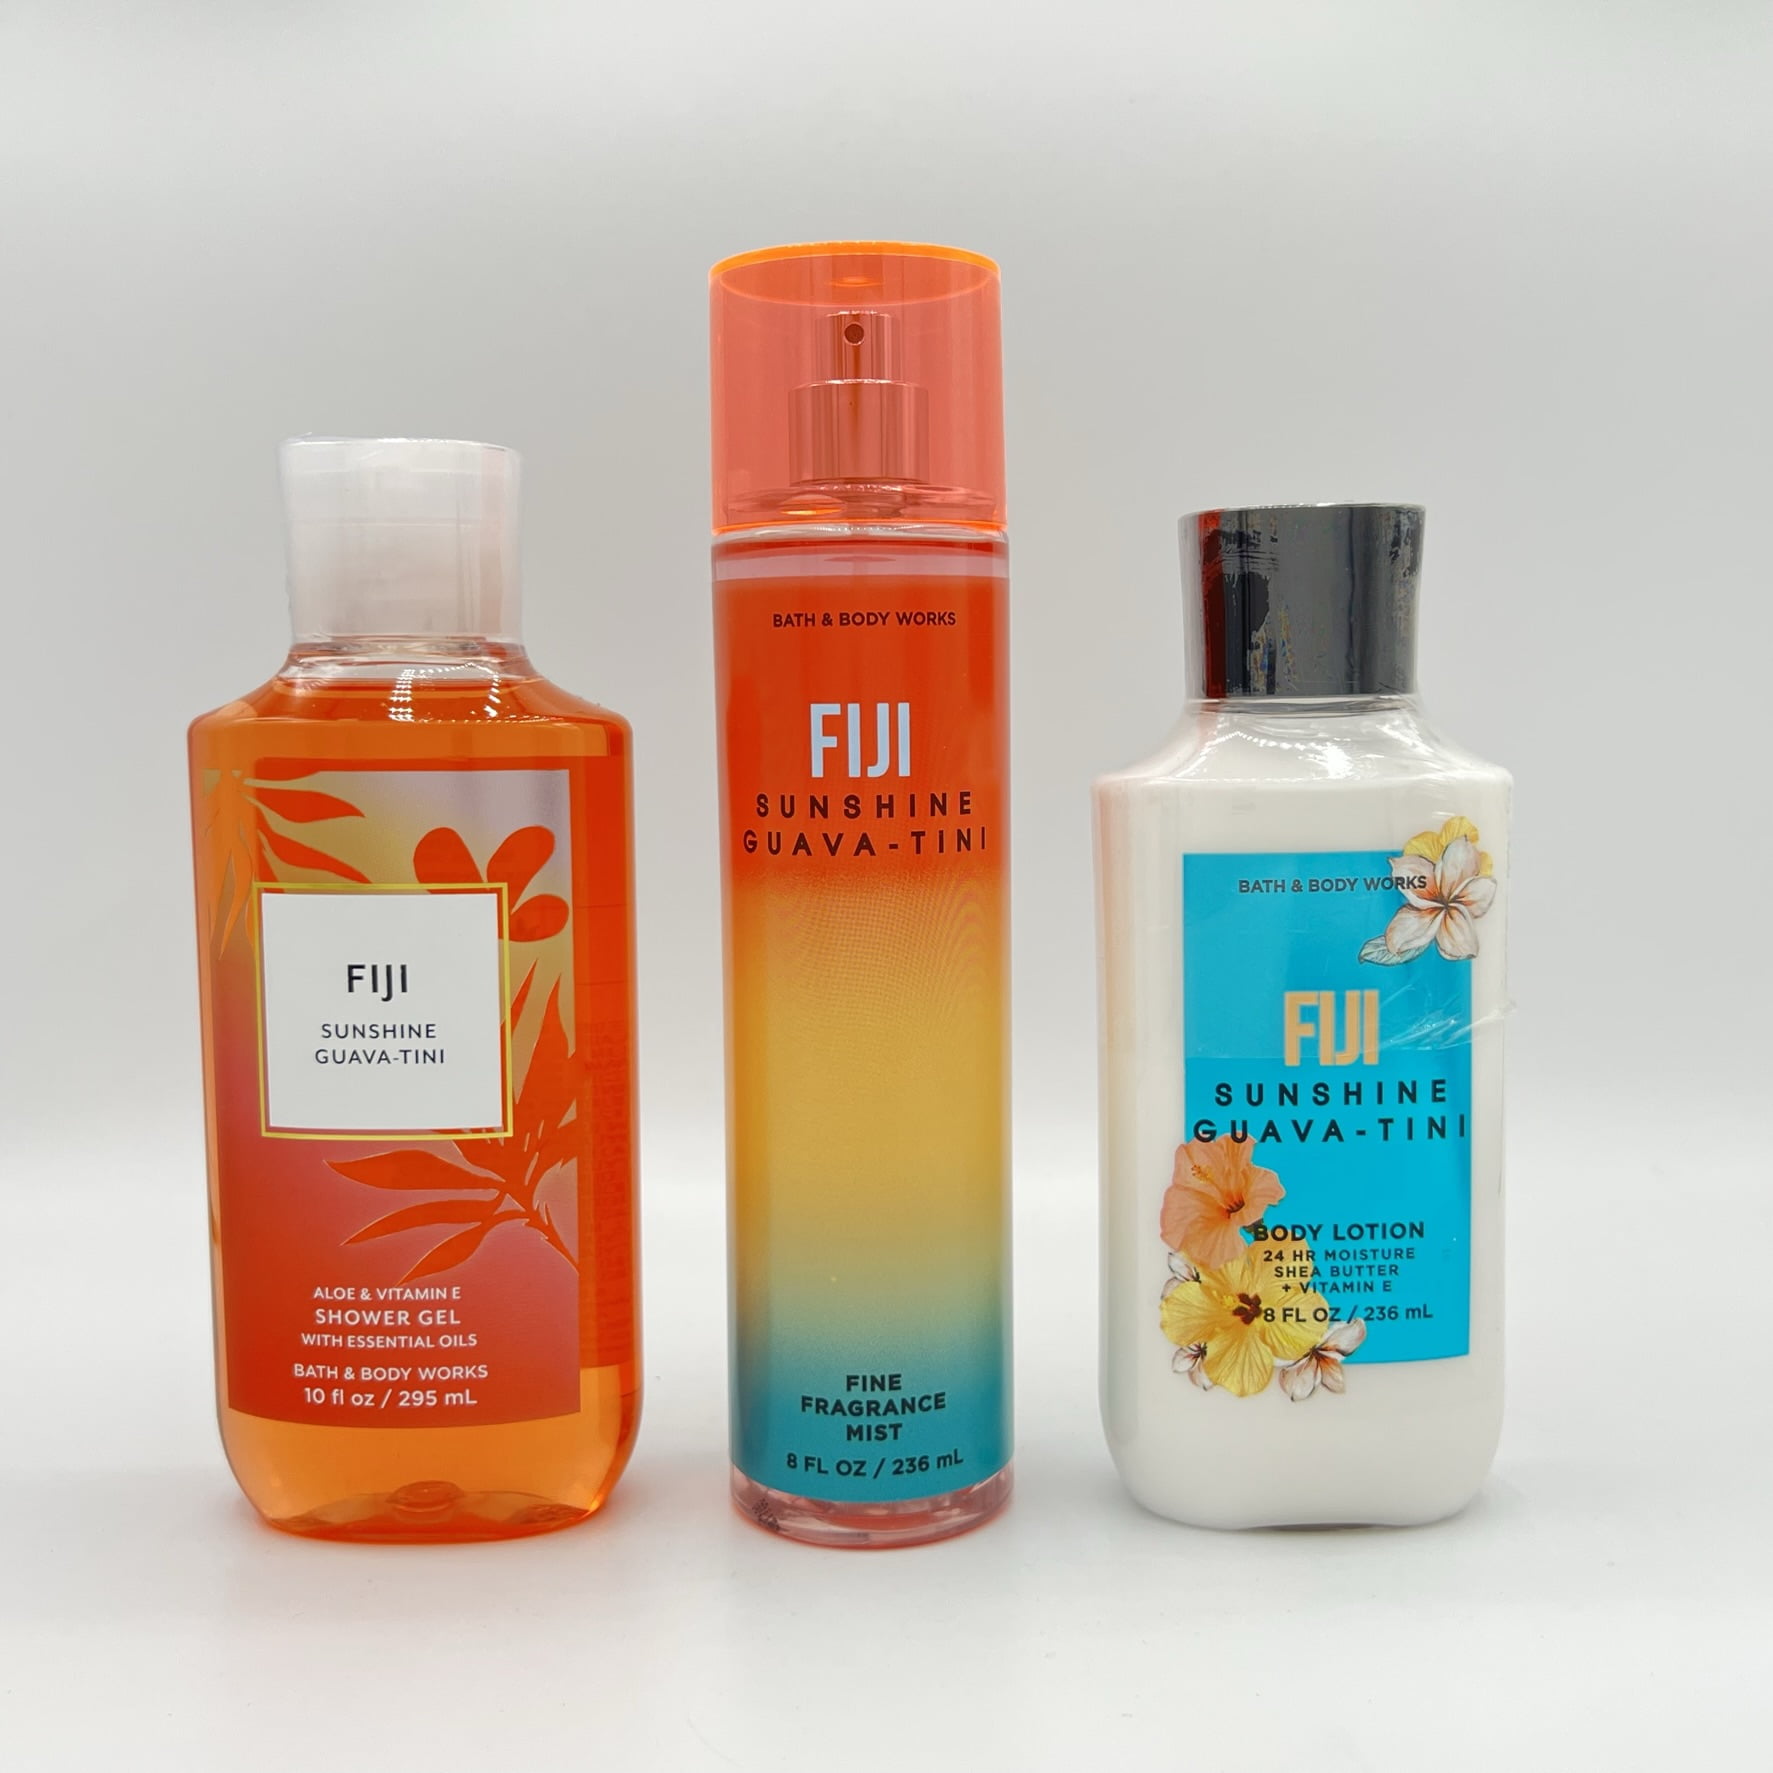 Bath & Body Works Wildberry Chamomile Shower Gel Body Wash 3 Pack